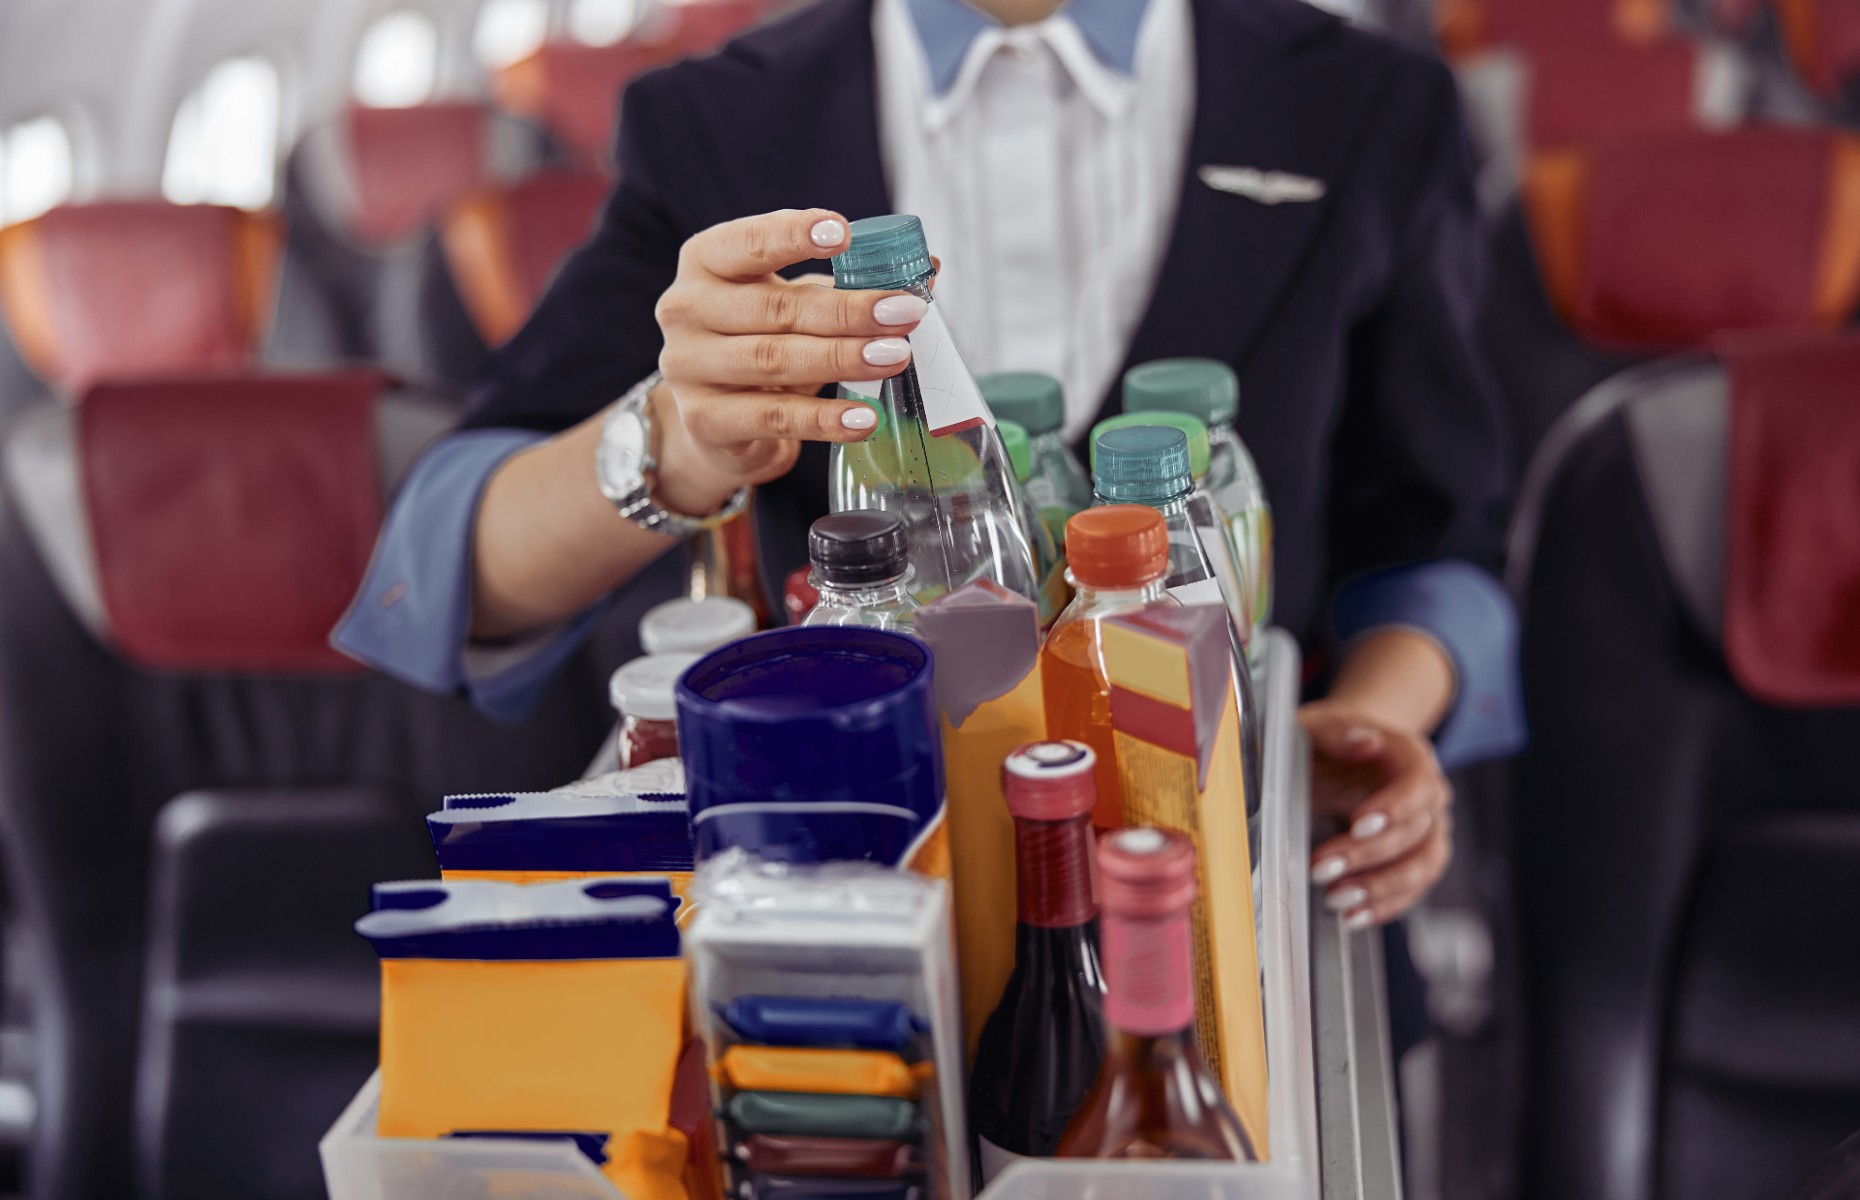 Drinks trolley on an aircraft (Image: Ivan Dudka/Shutterstock)